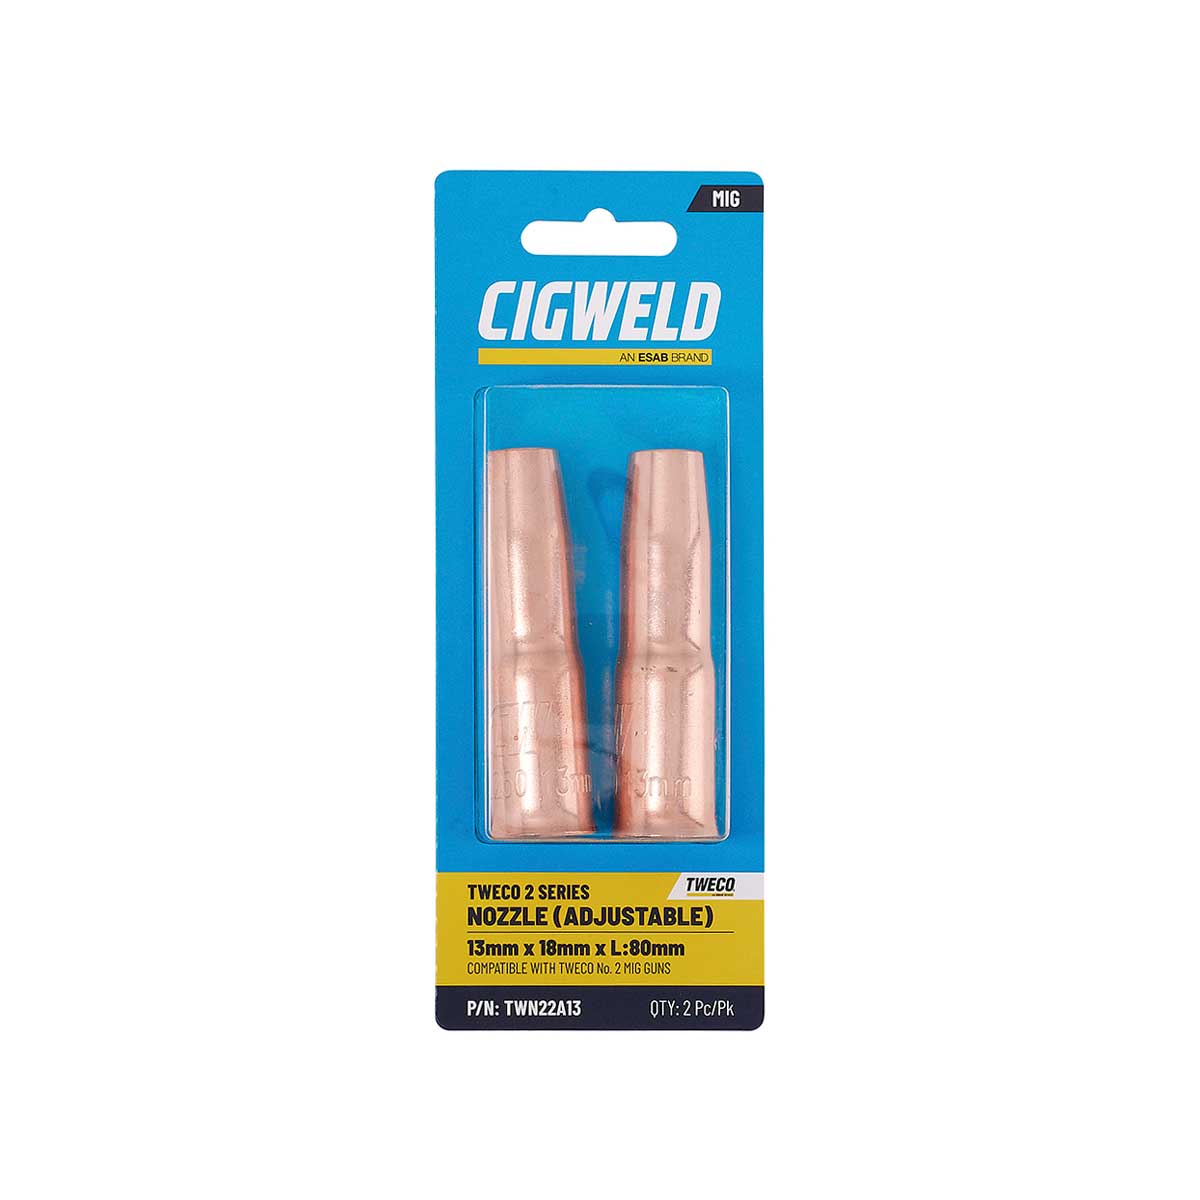 Cigweld Tweco 2 Nozzle Adjustable 13mm